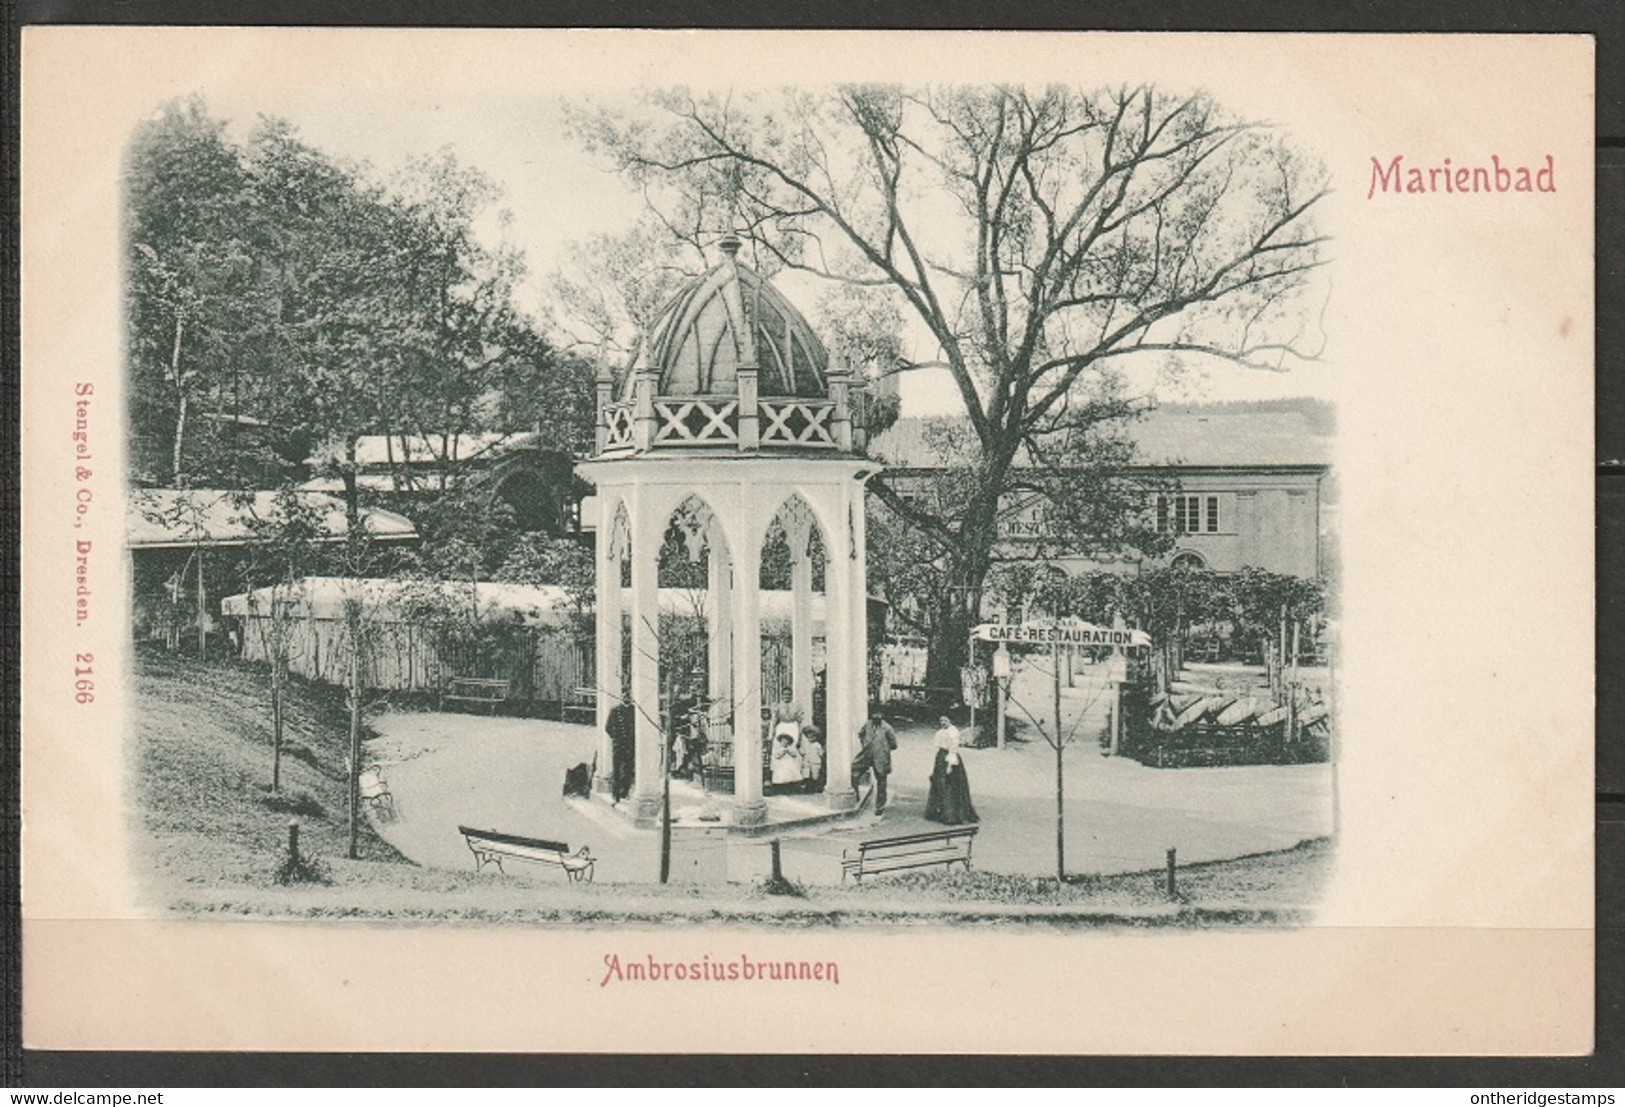 Germany Marienbad Ambrosiusbrunnen (fountain) 1890s - Bad Marienberg